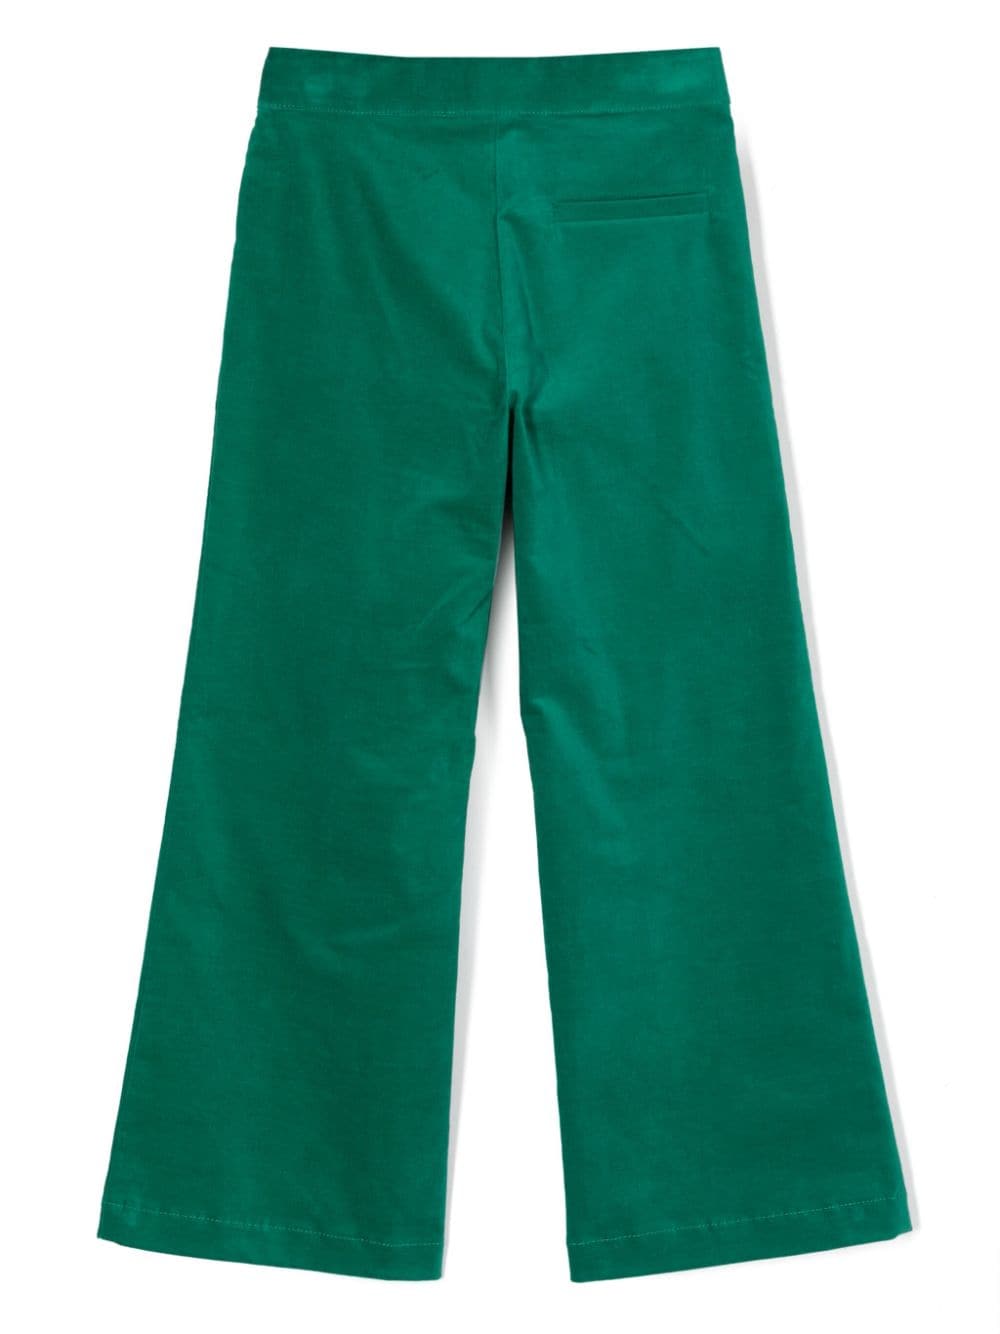 Pantalon fille vert émeraude avec logo